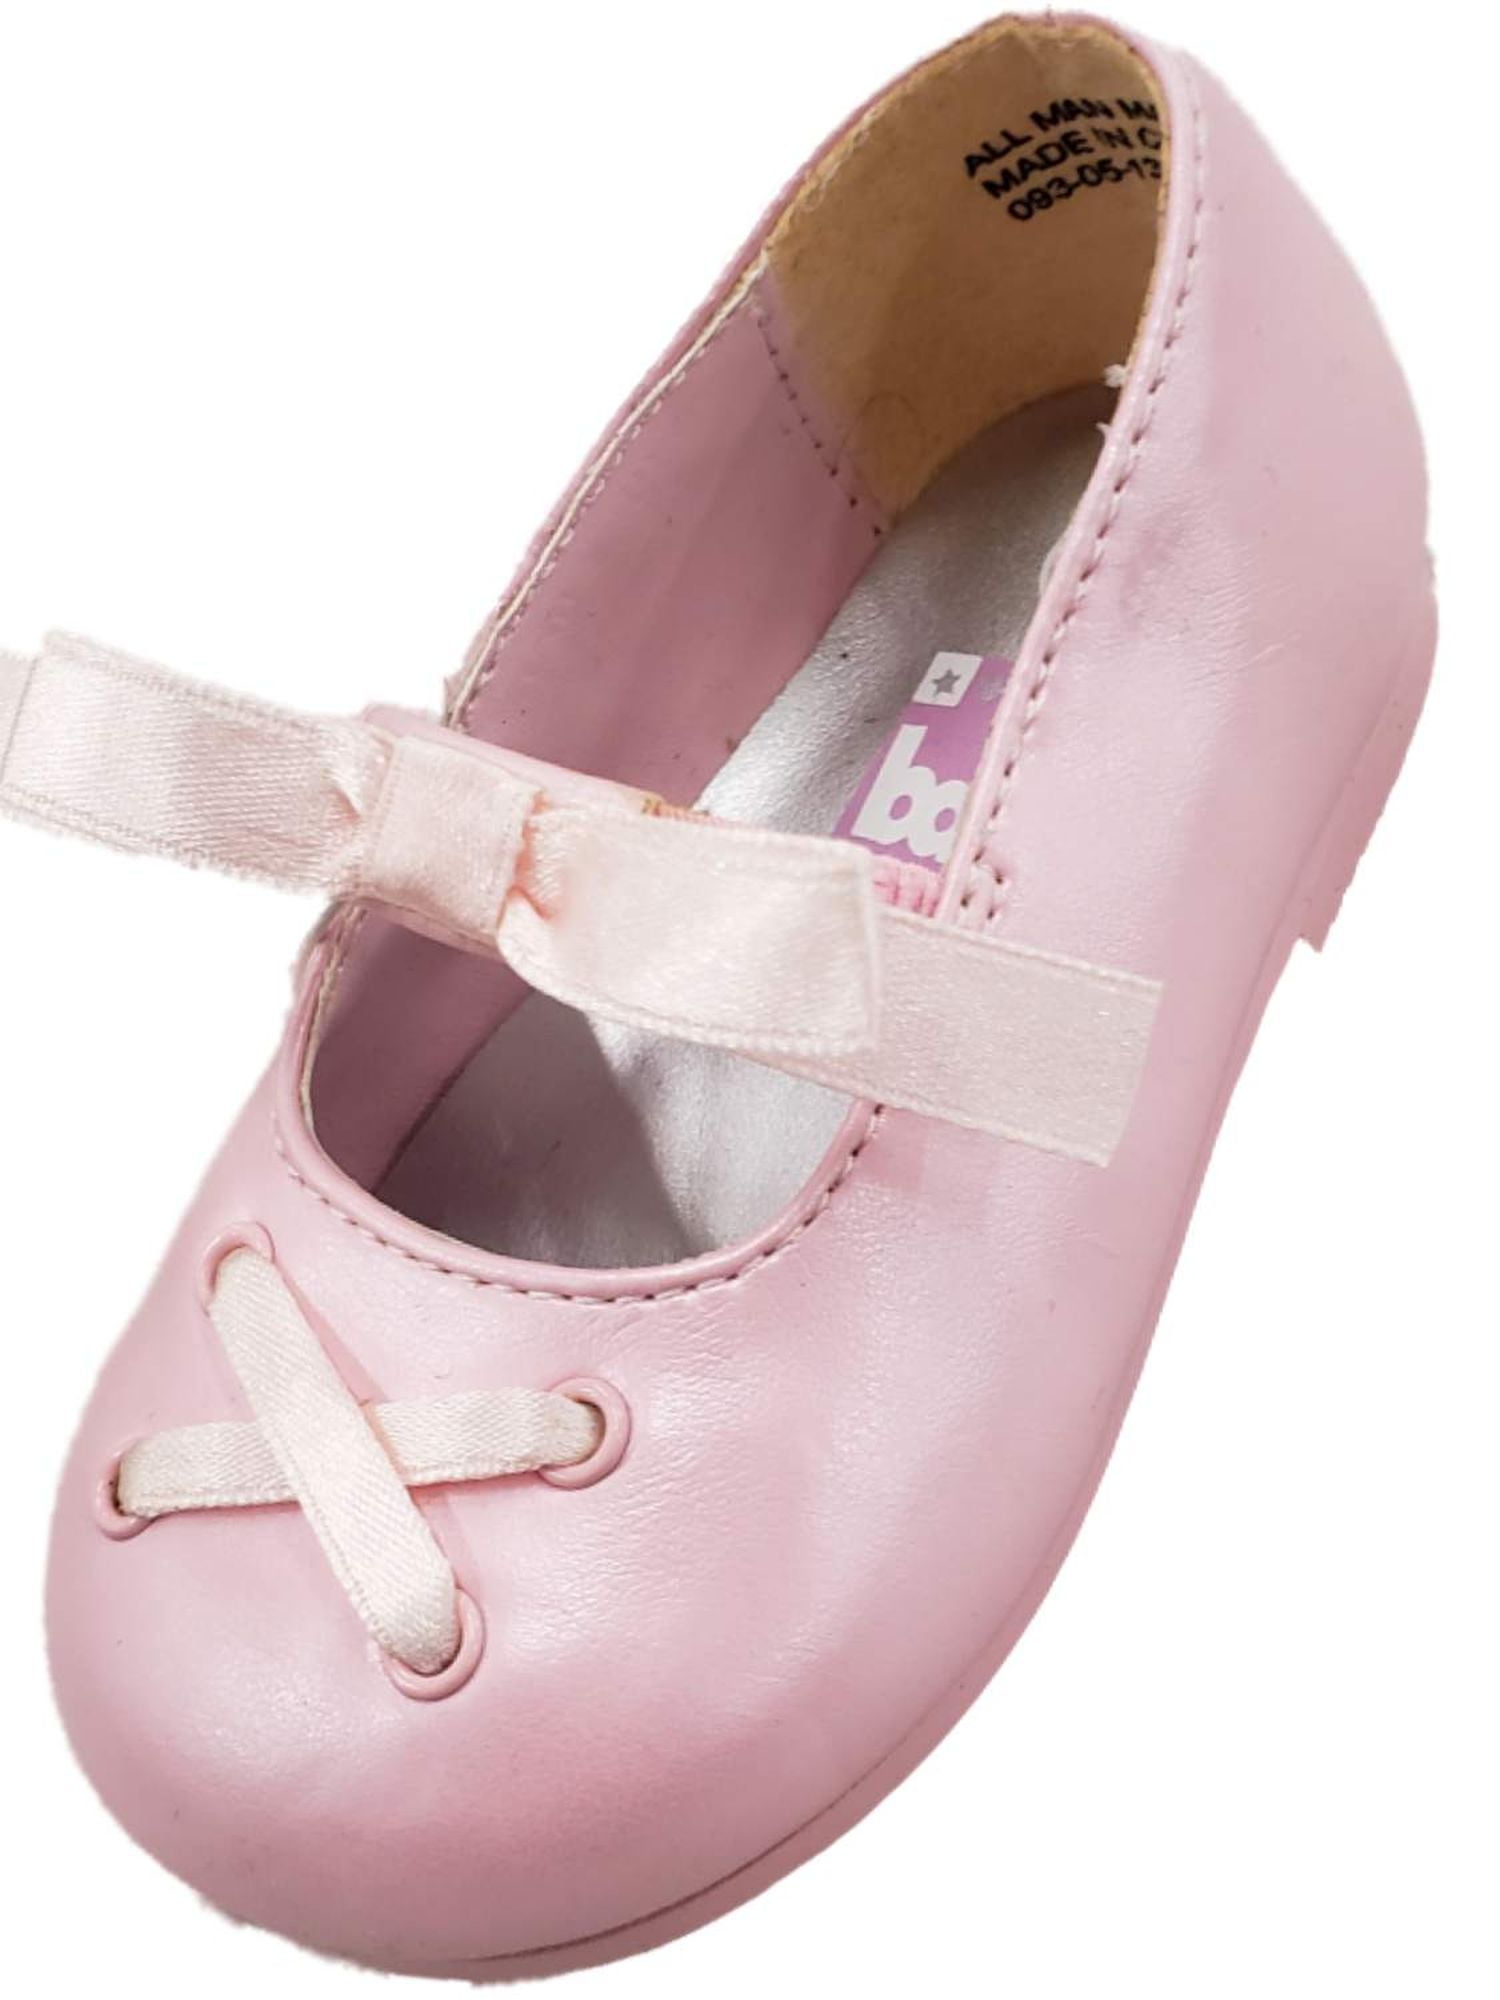 Girls Flower Classic Mary Jane Ballerina Flat Shoes Pink Wine Toddler Little Kid 